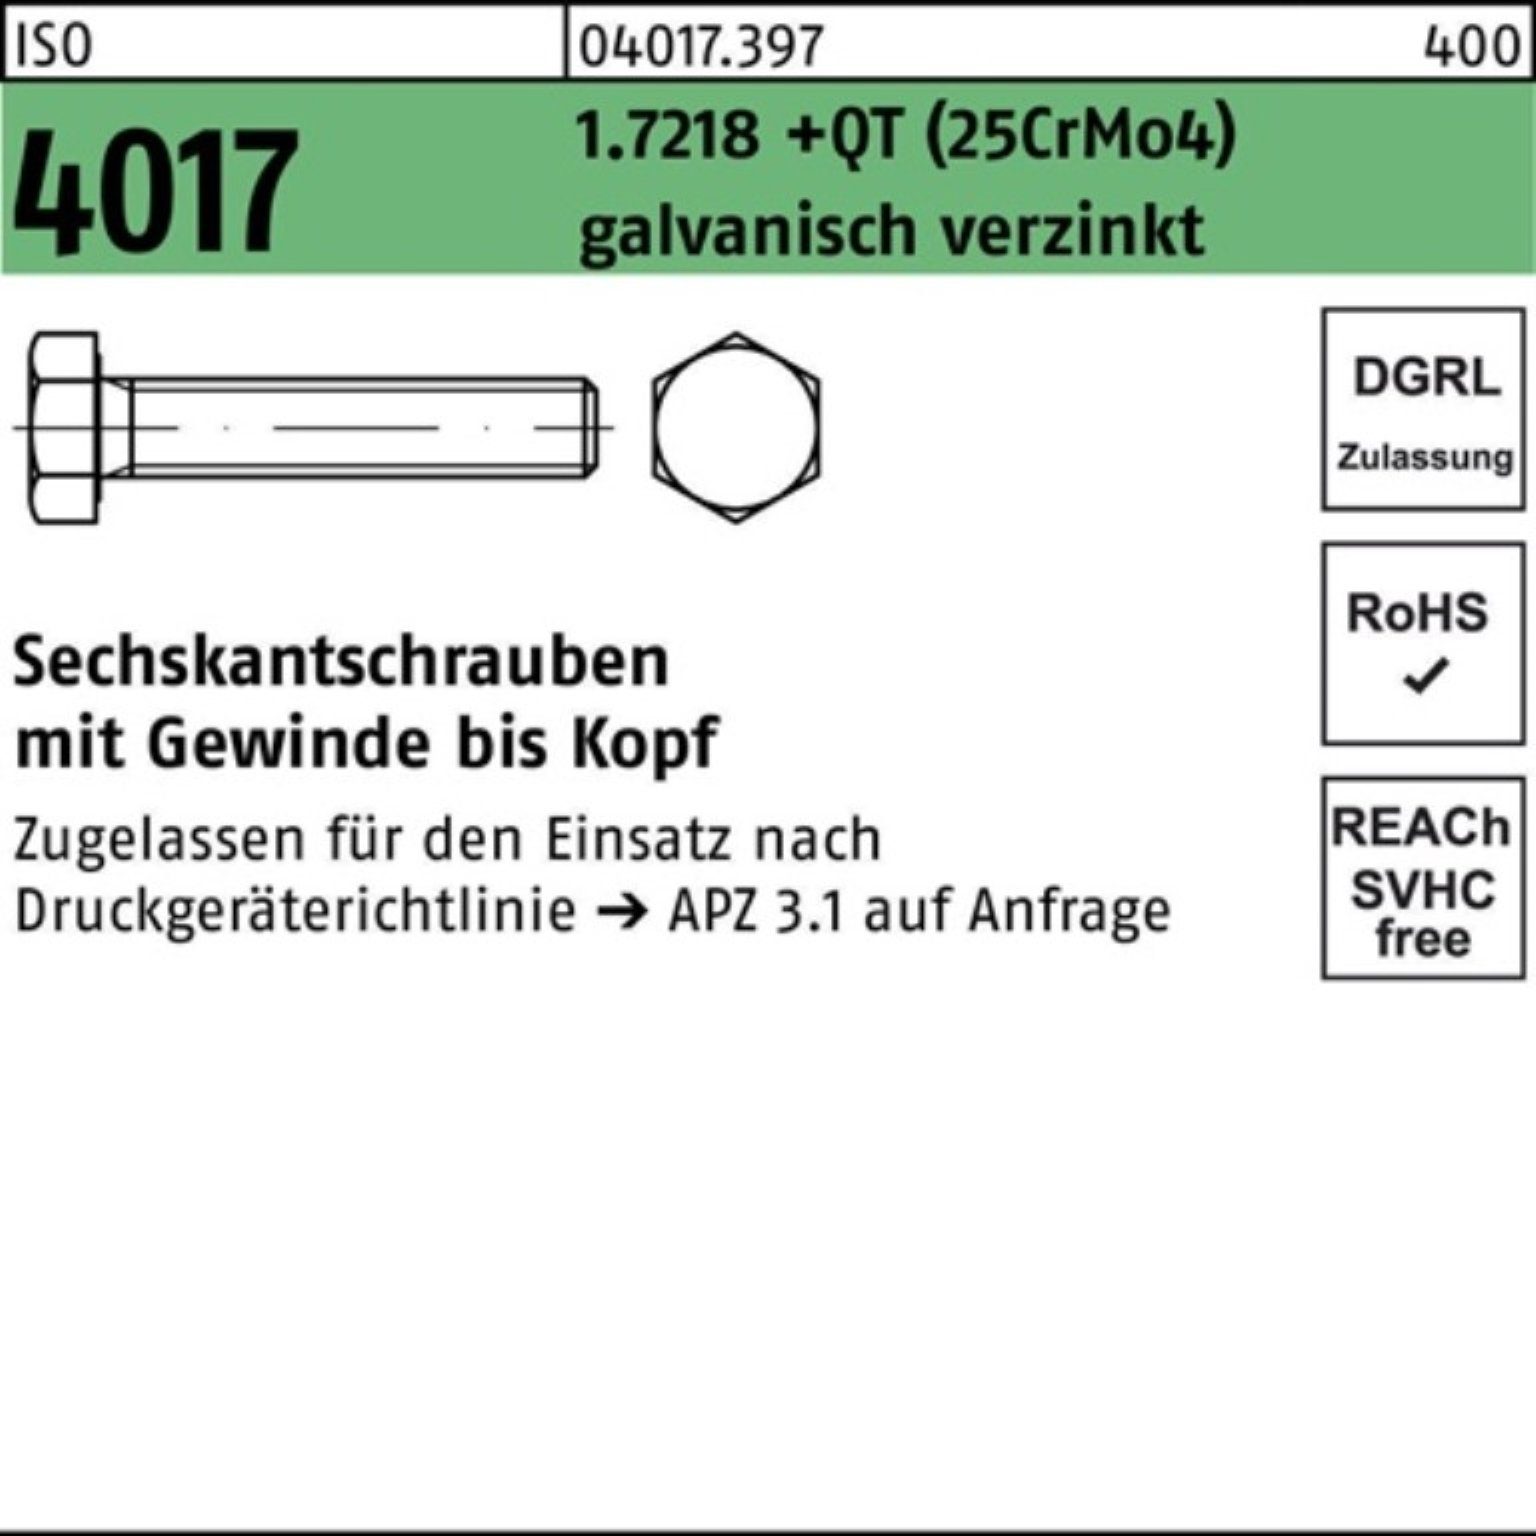 ISO VG +QT Pack (25CrMo4) g Sechskantschraube 1.7218 100er Bufab M20x70 Sechskantschraube 4017